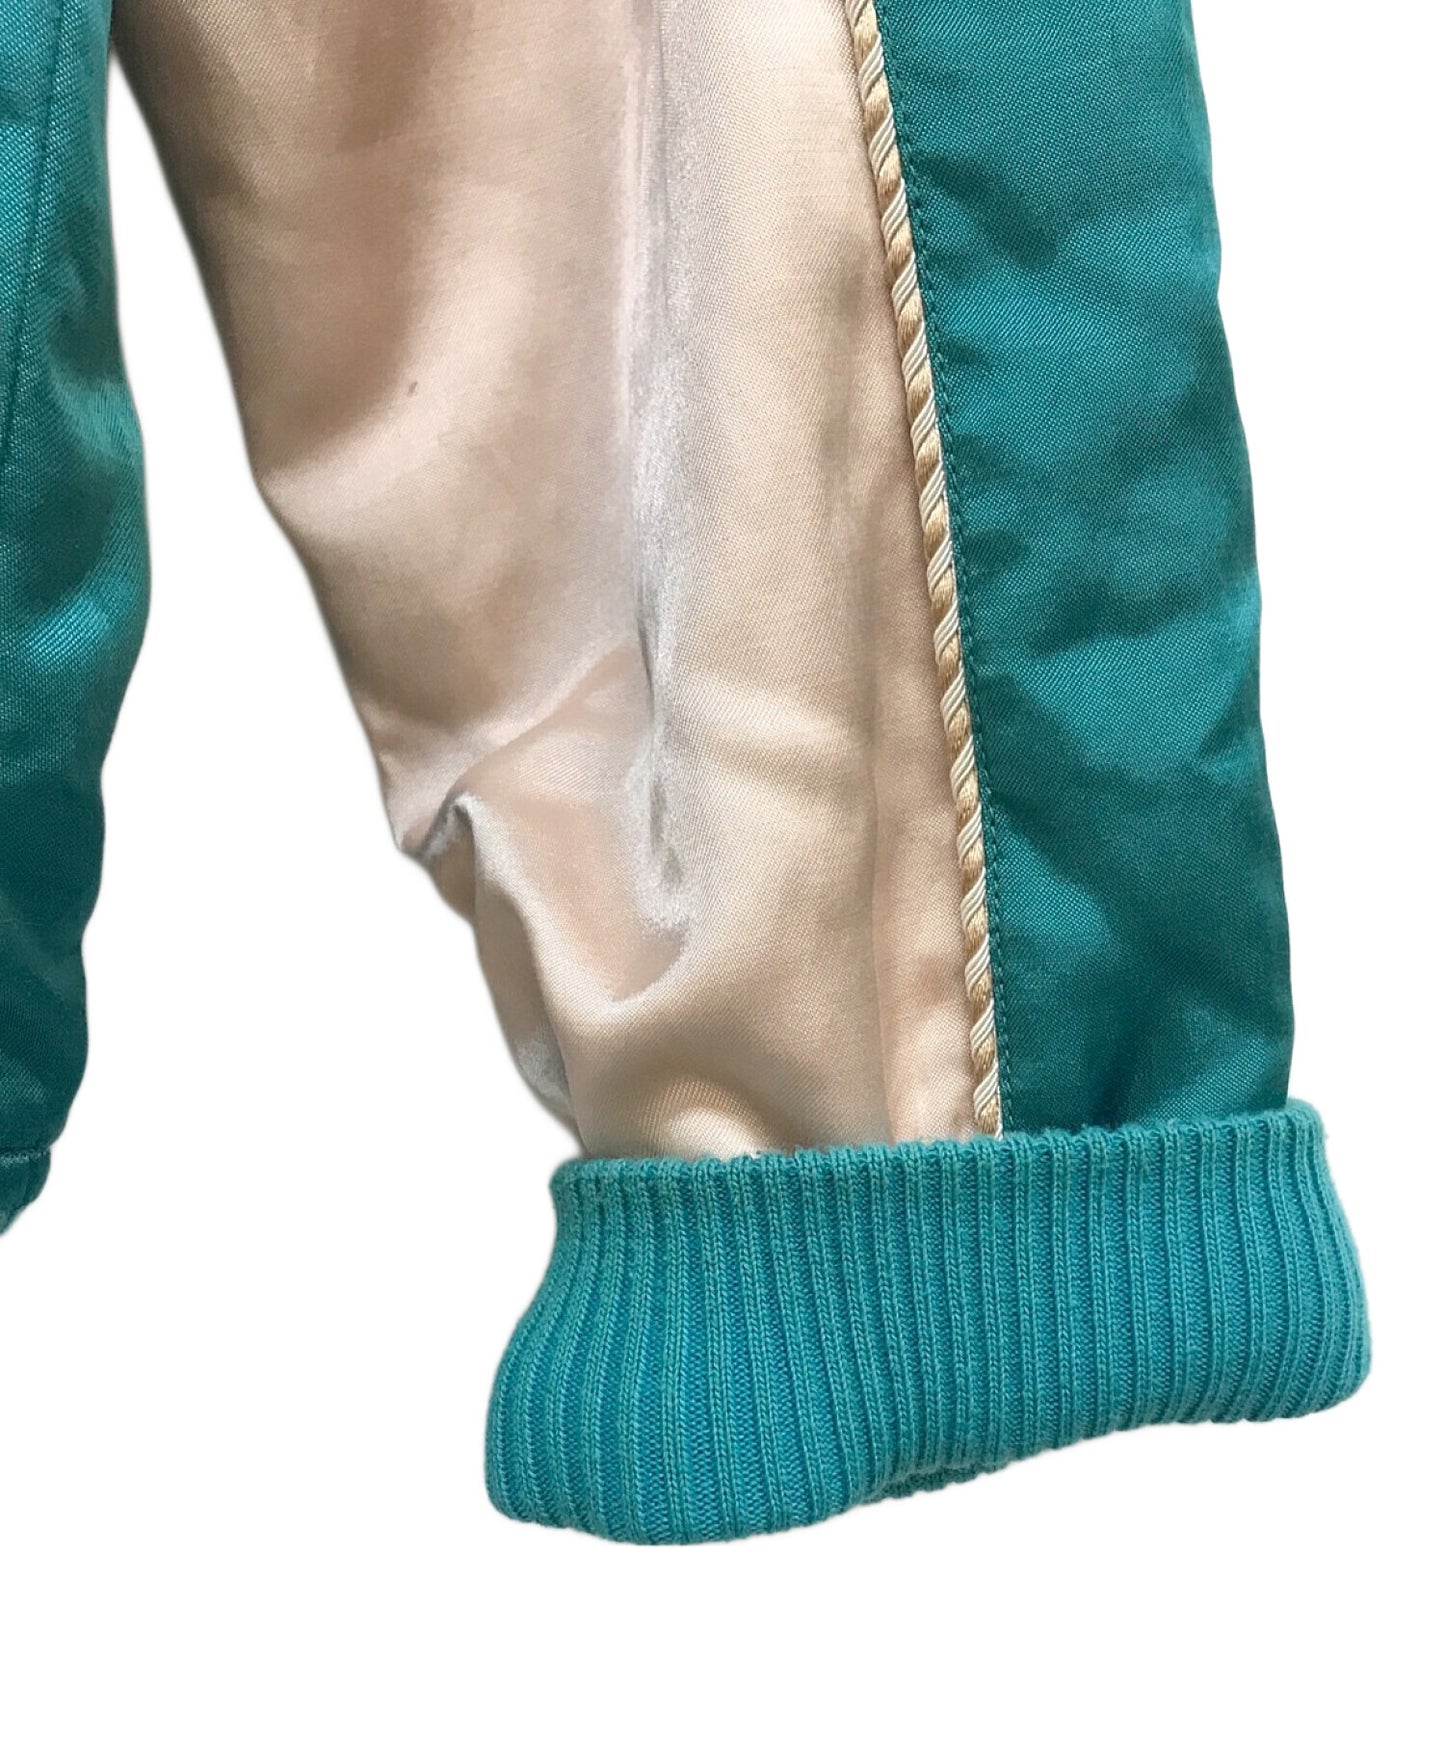 [Pre-owned] A BATHING APE vape souvenir jacket 001ljd301008x